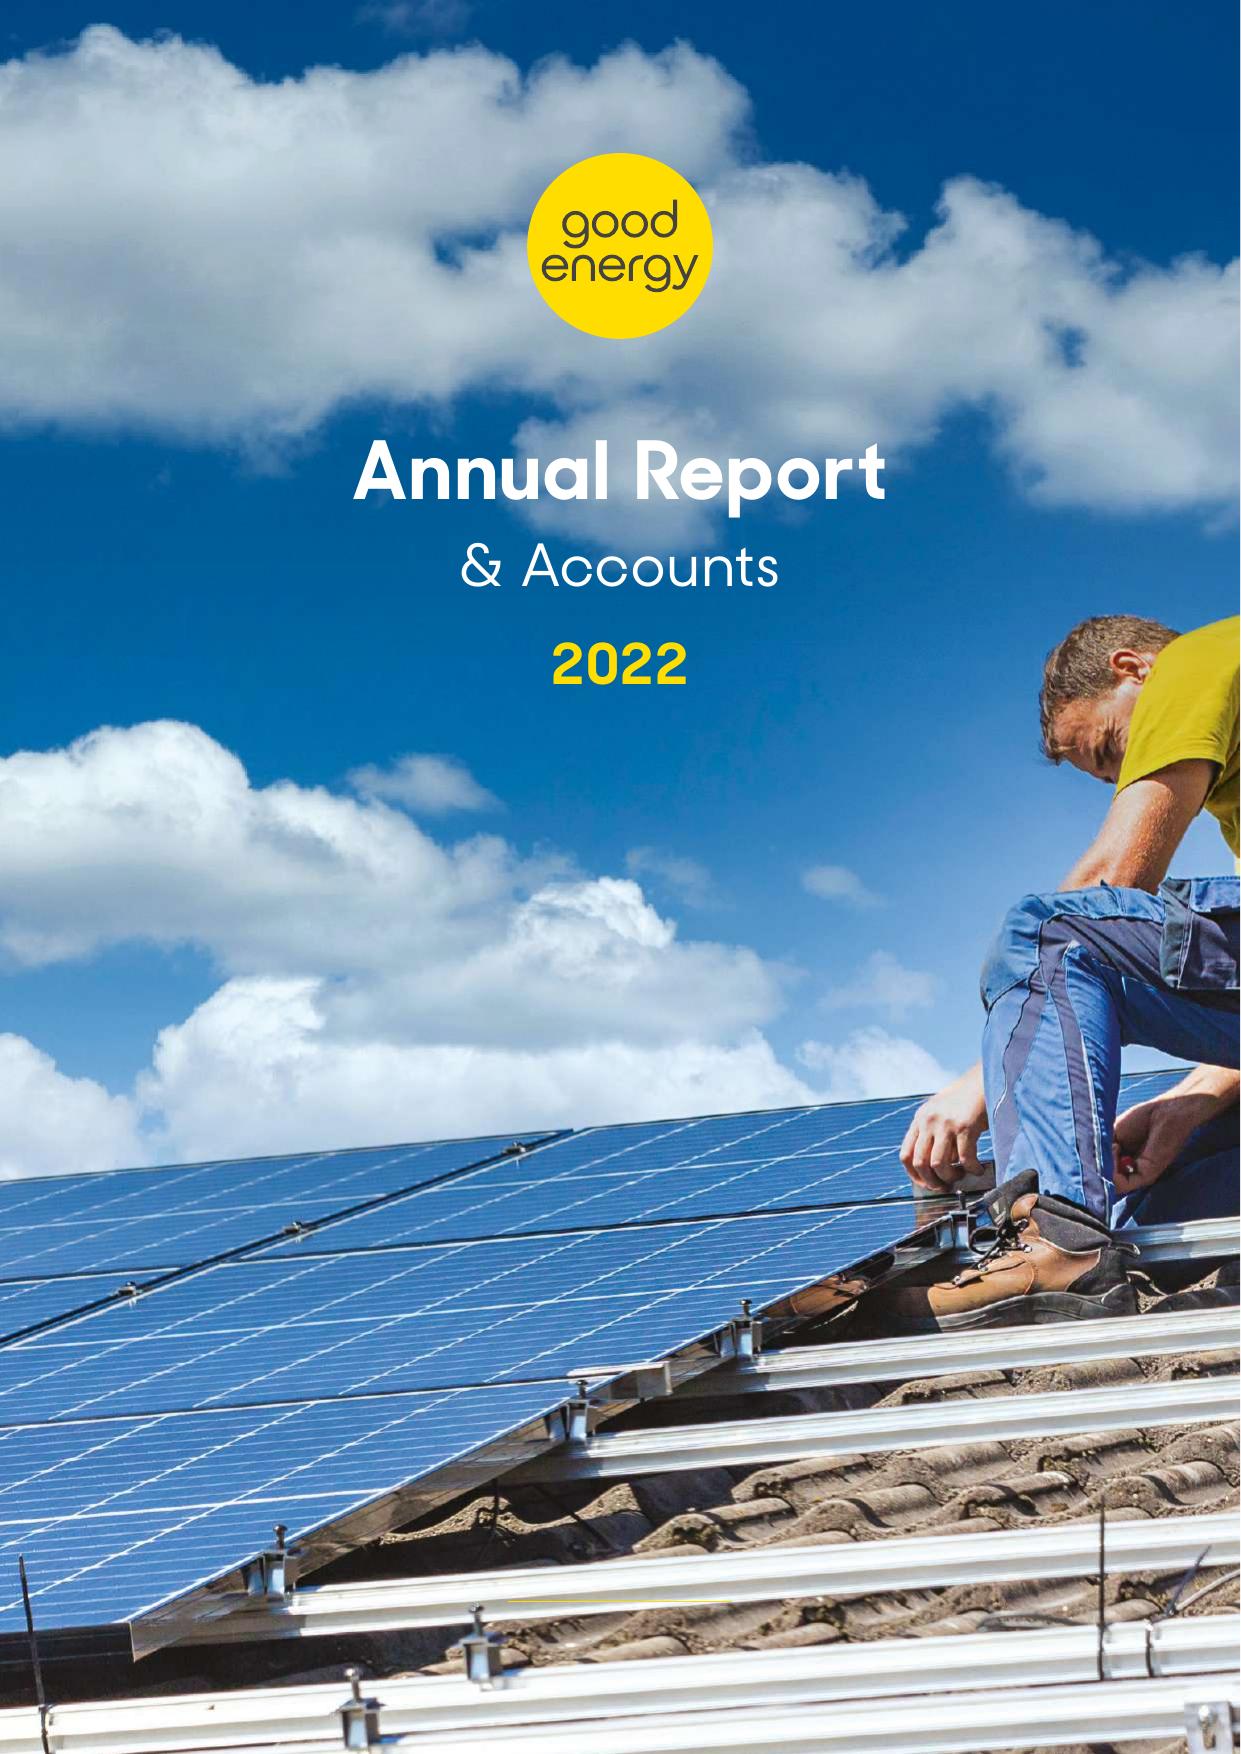 CARDIFFNEWSROOM 2022 Annual Report